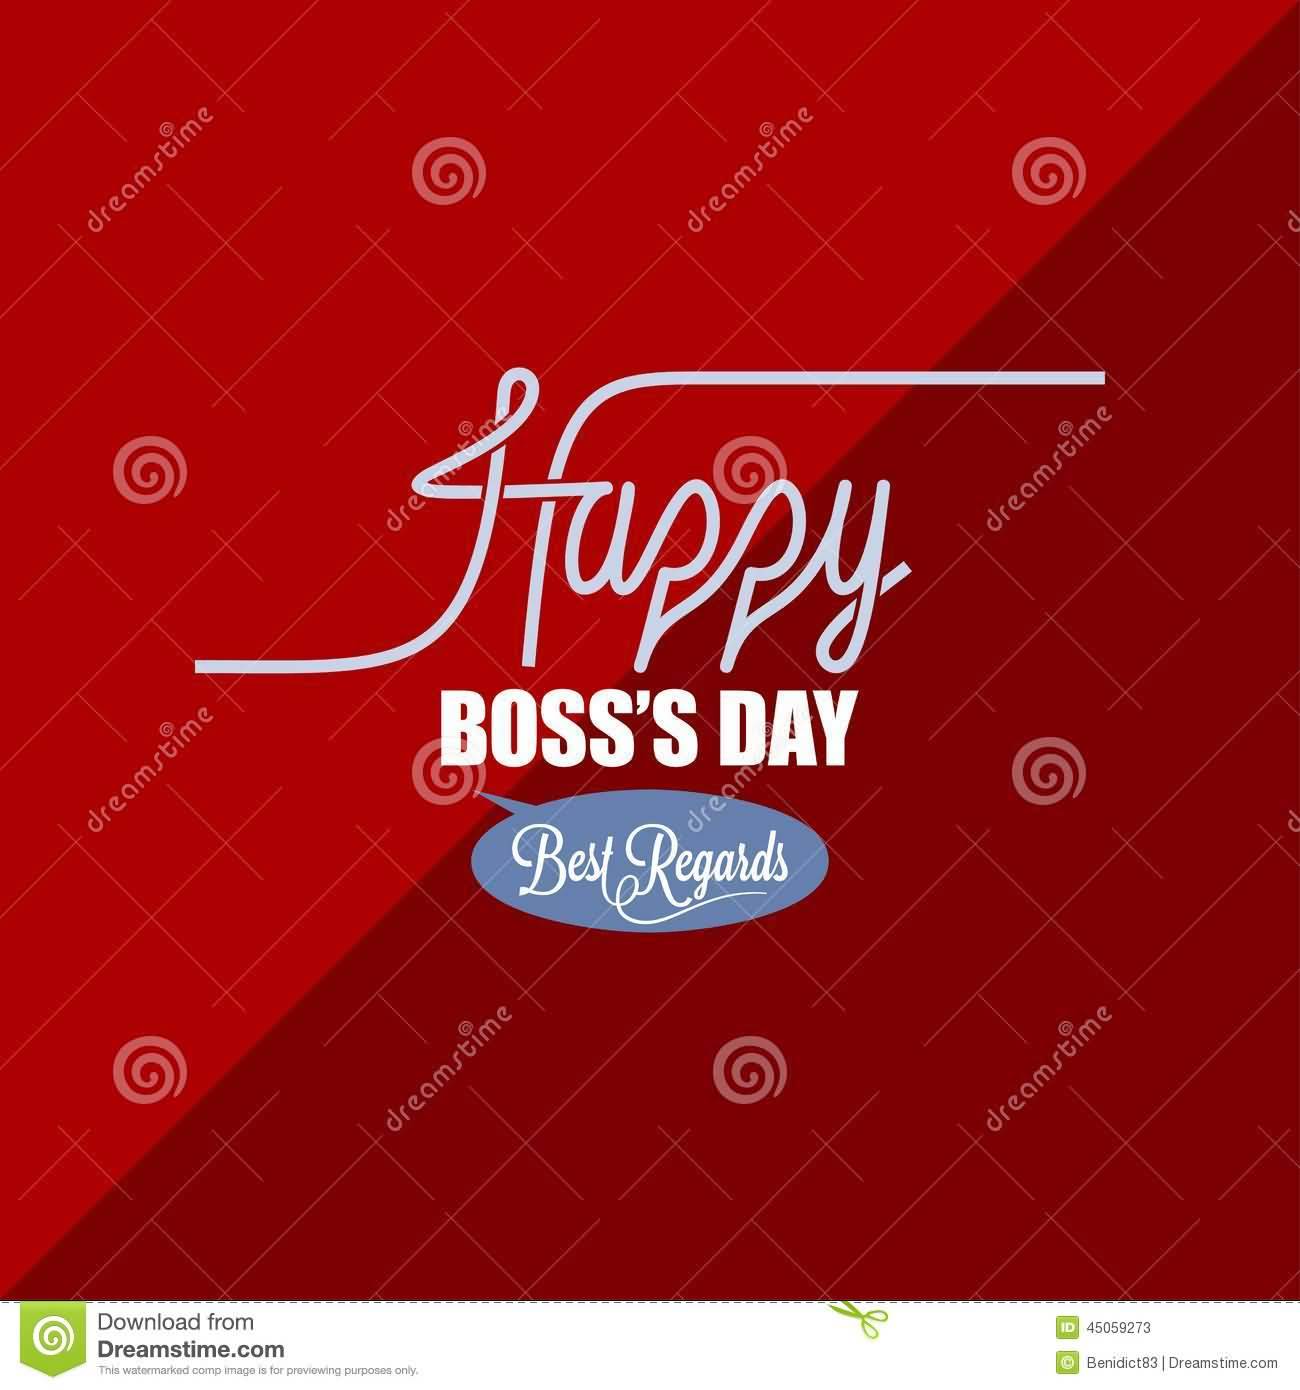 Happy Boss's Day 2016 Best Regards Greeting Card